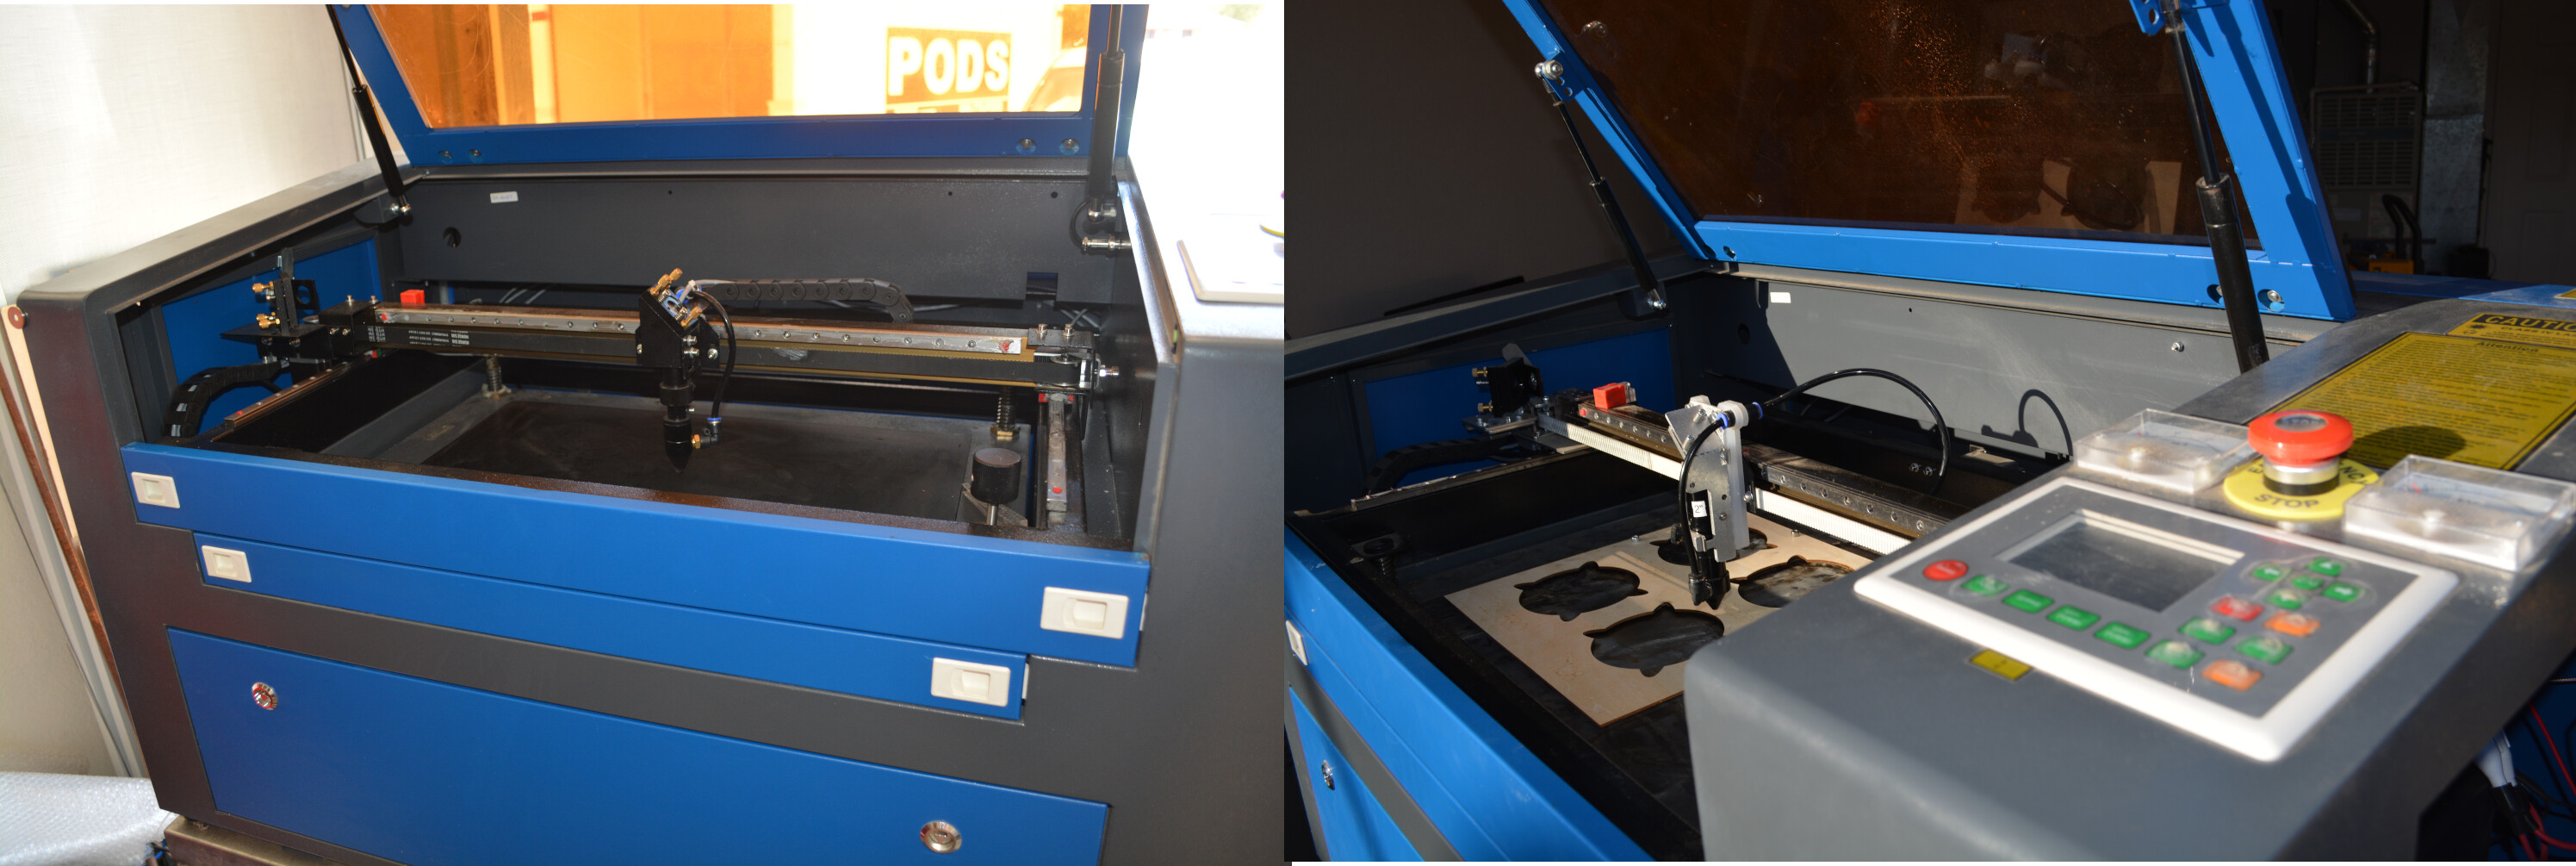 OMTech ZF2028-60 60W CO2 Laser Engraver Cutting Machine 20 x 28